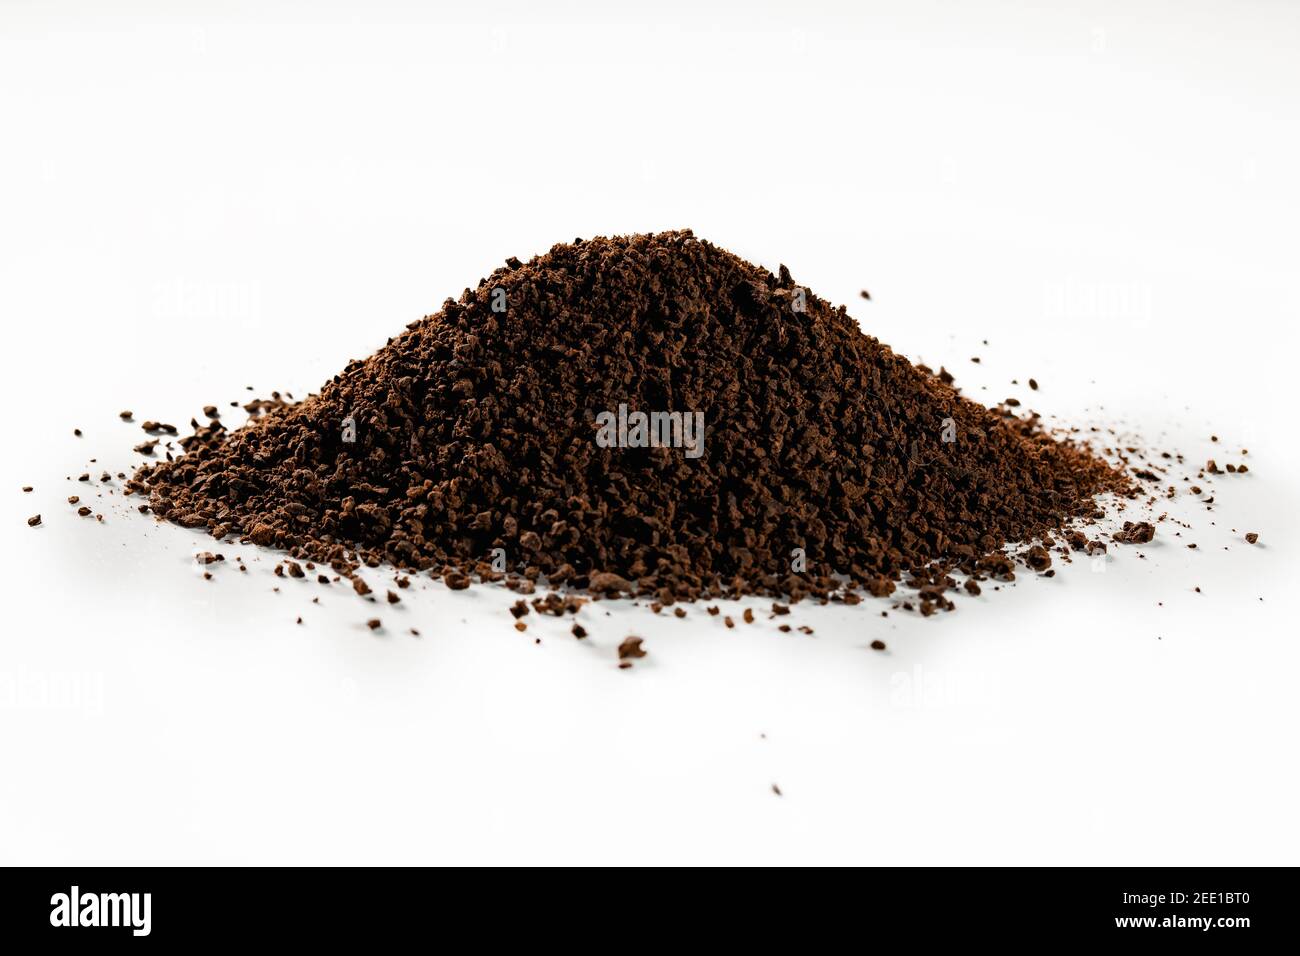 Roasted coffee ground on isolated white background Stock Photo